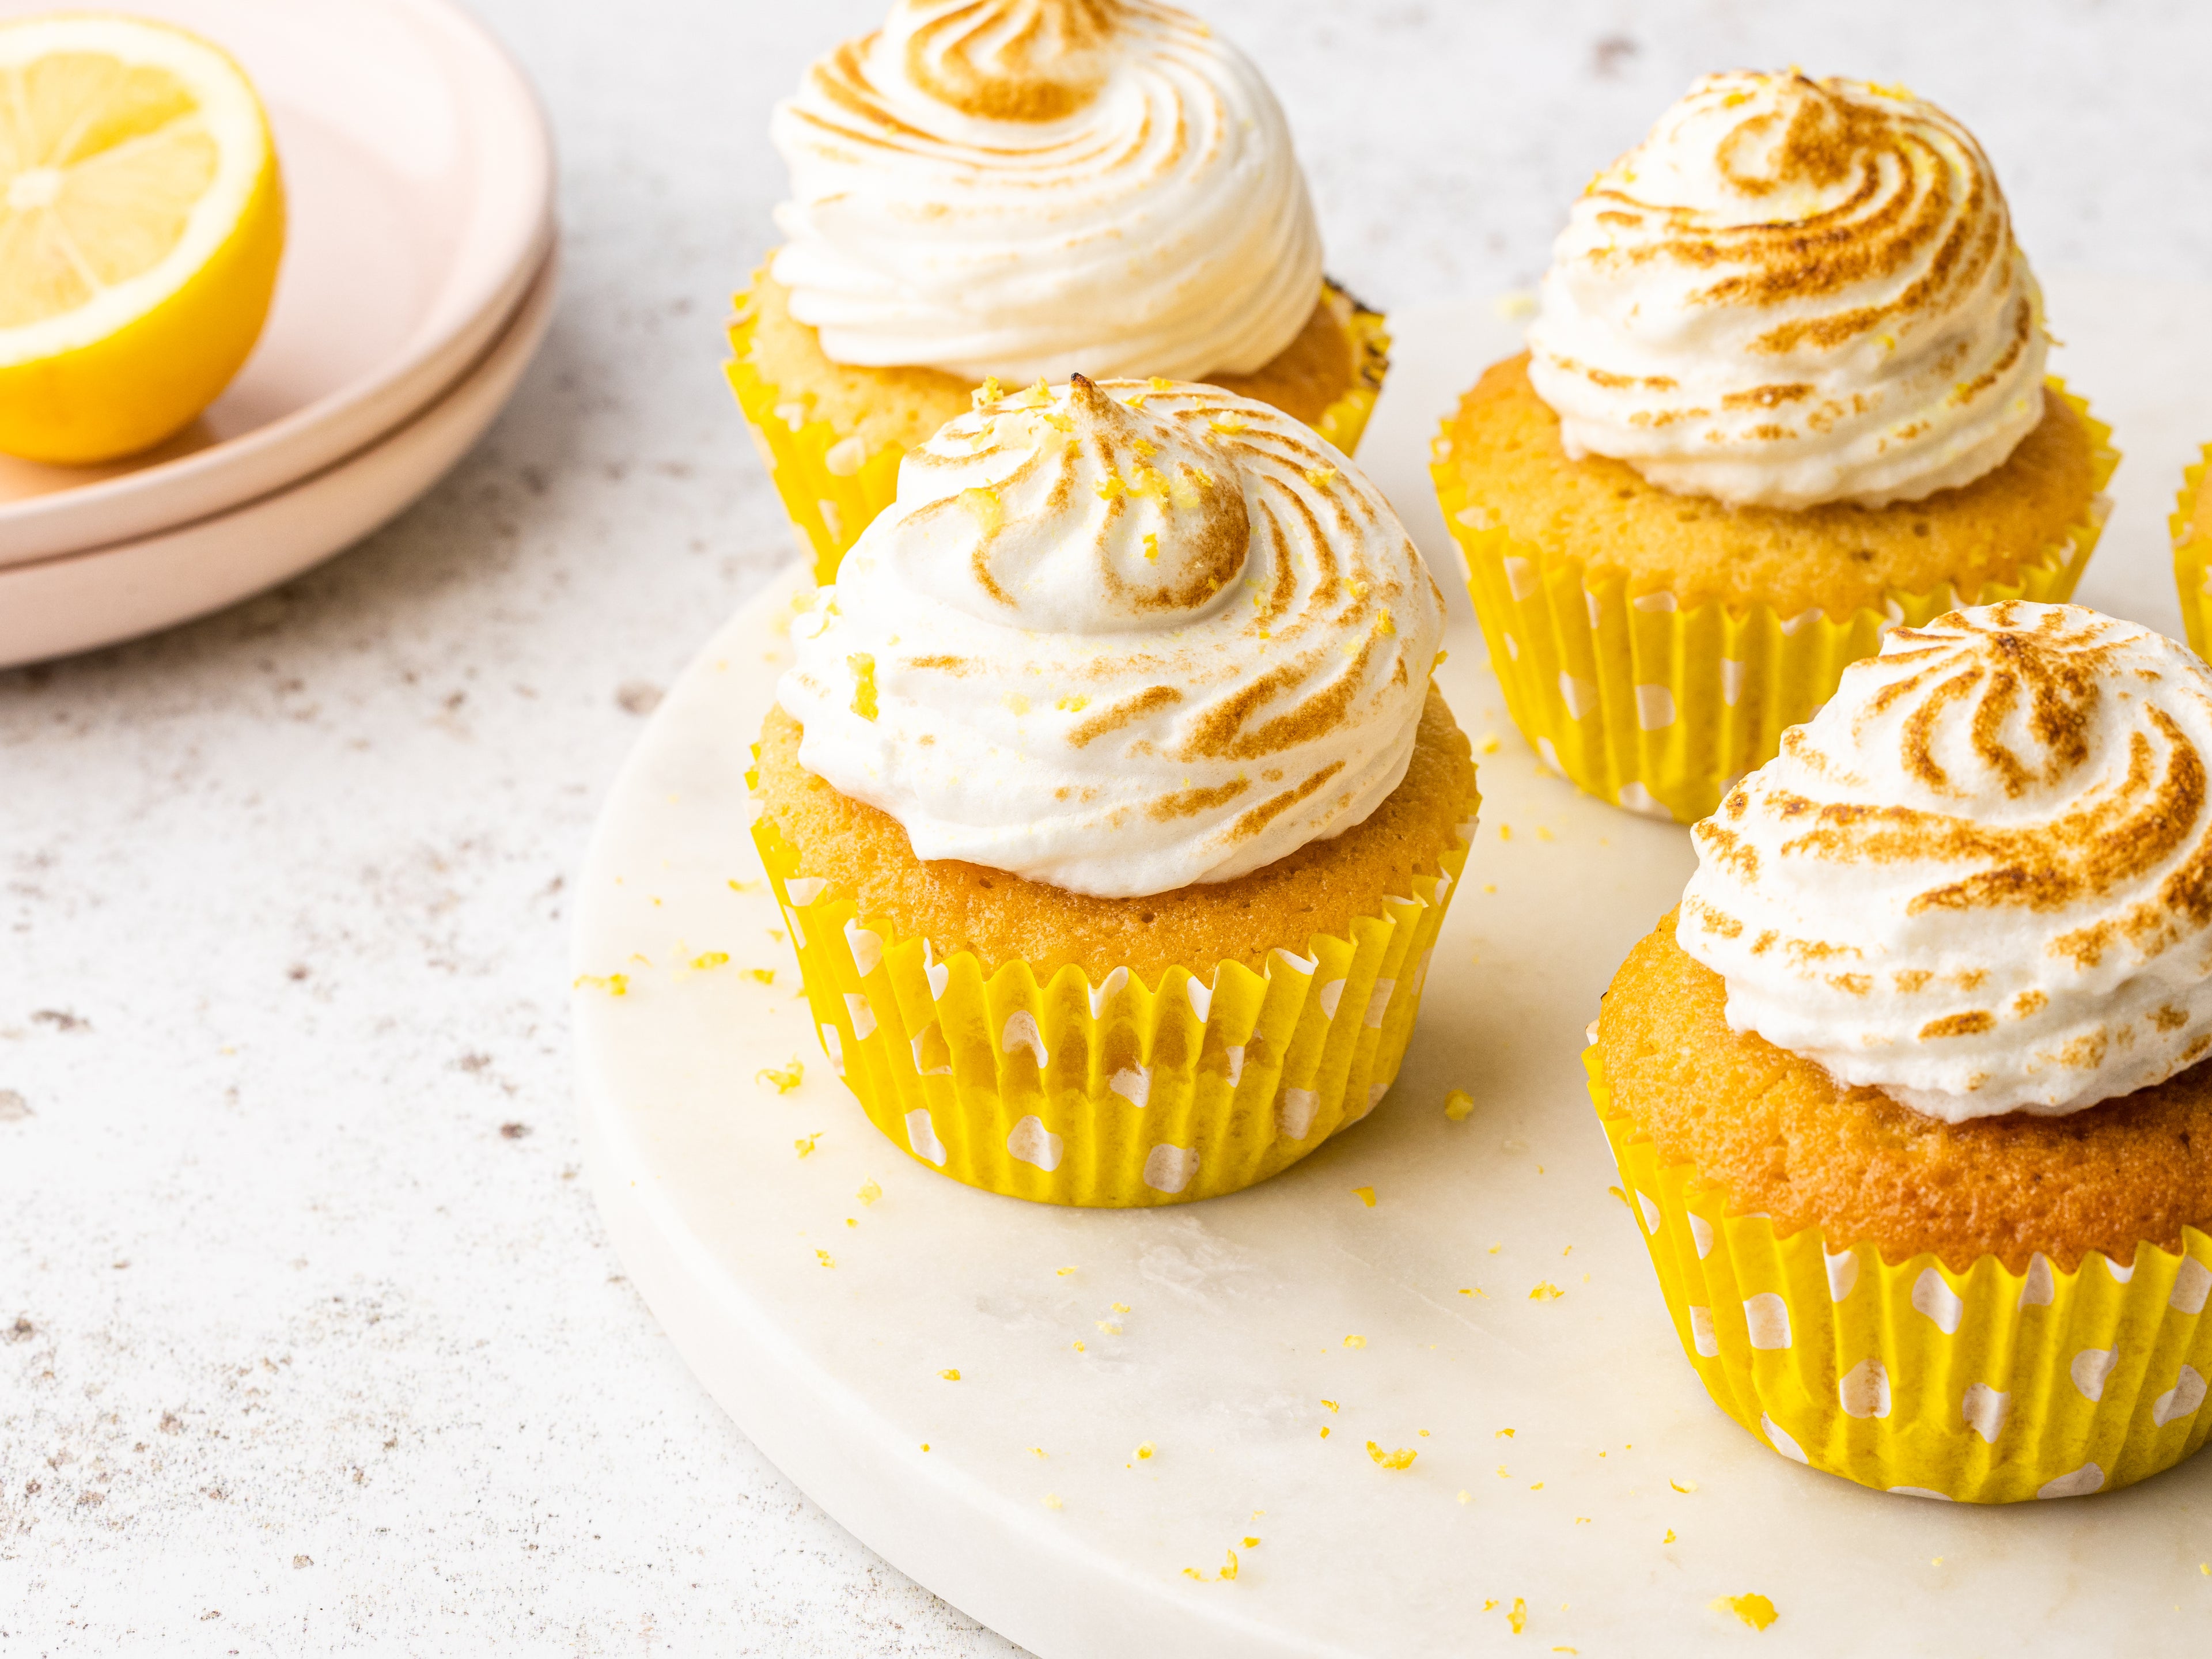 Close up shot of 4 lemon meringue cupcakes on a circular plate